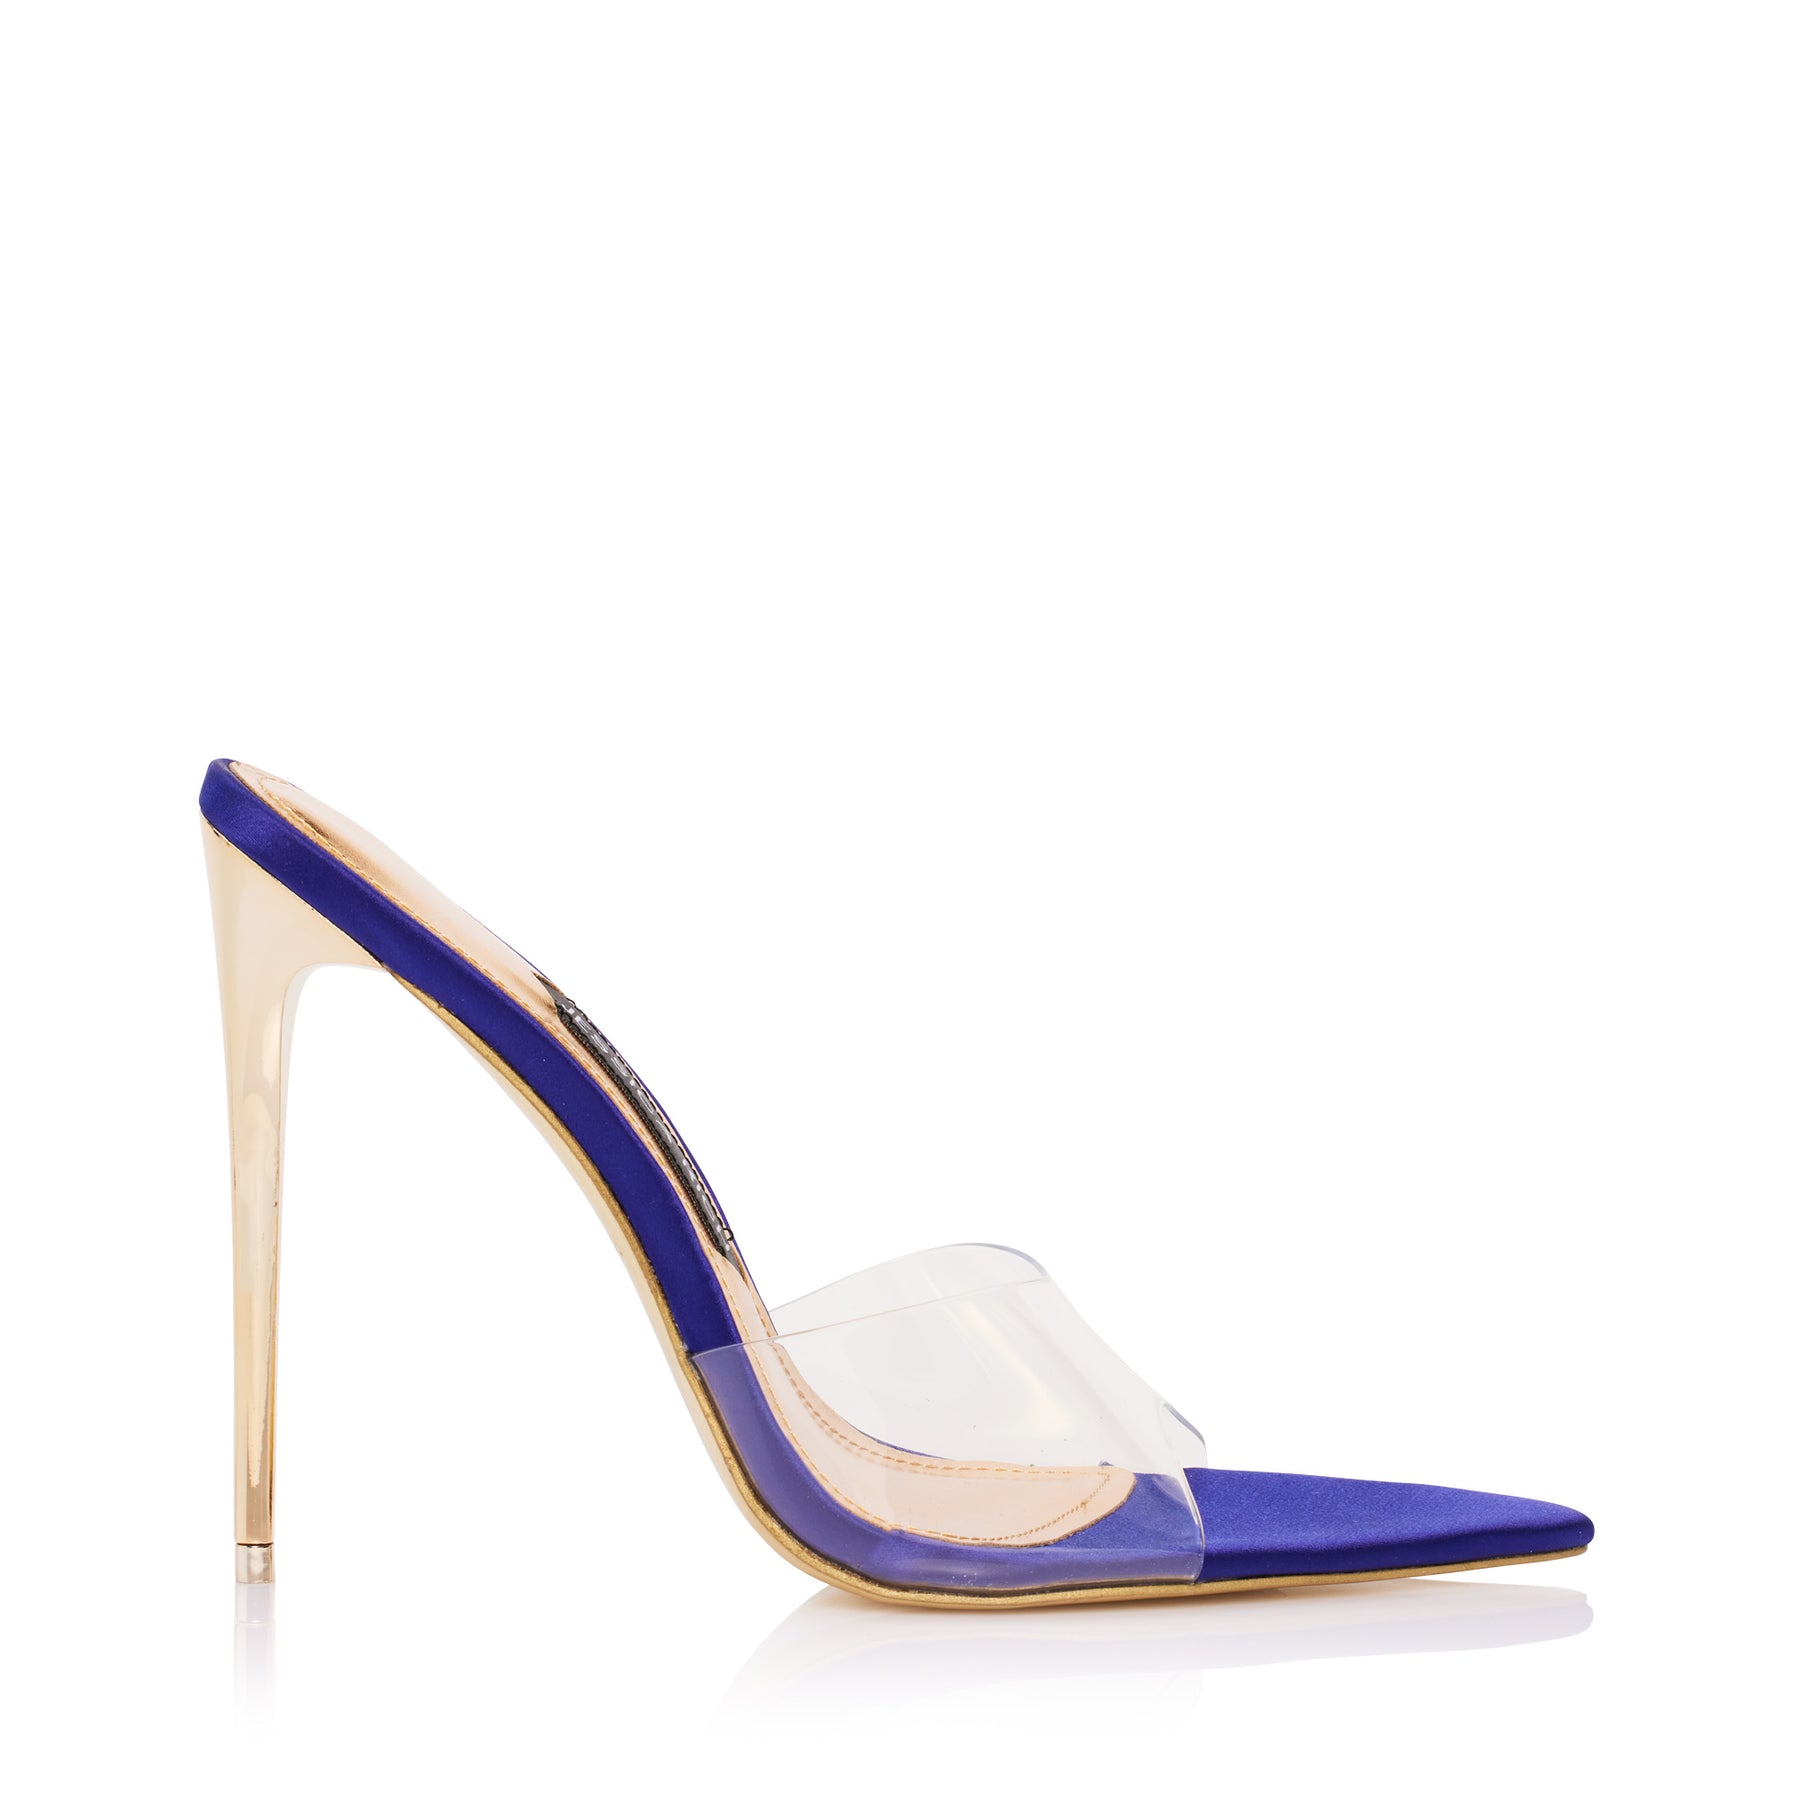 Profile of the satin purple Racy Mule high heels from luxury women’s shoe brand Jessica Rich.